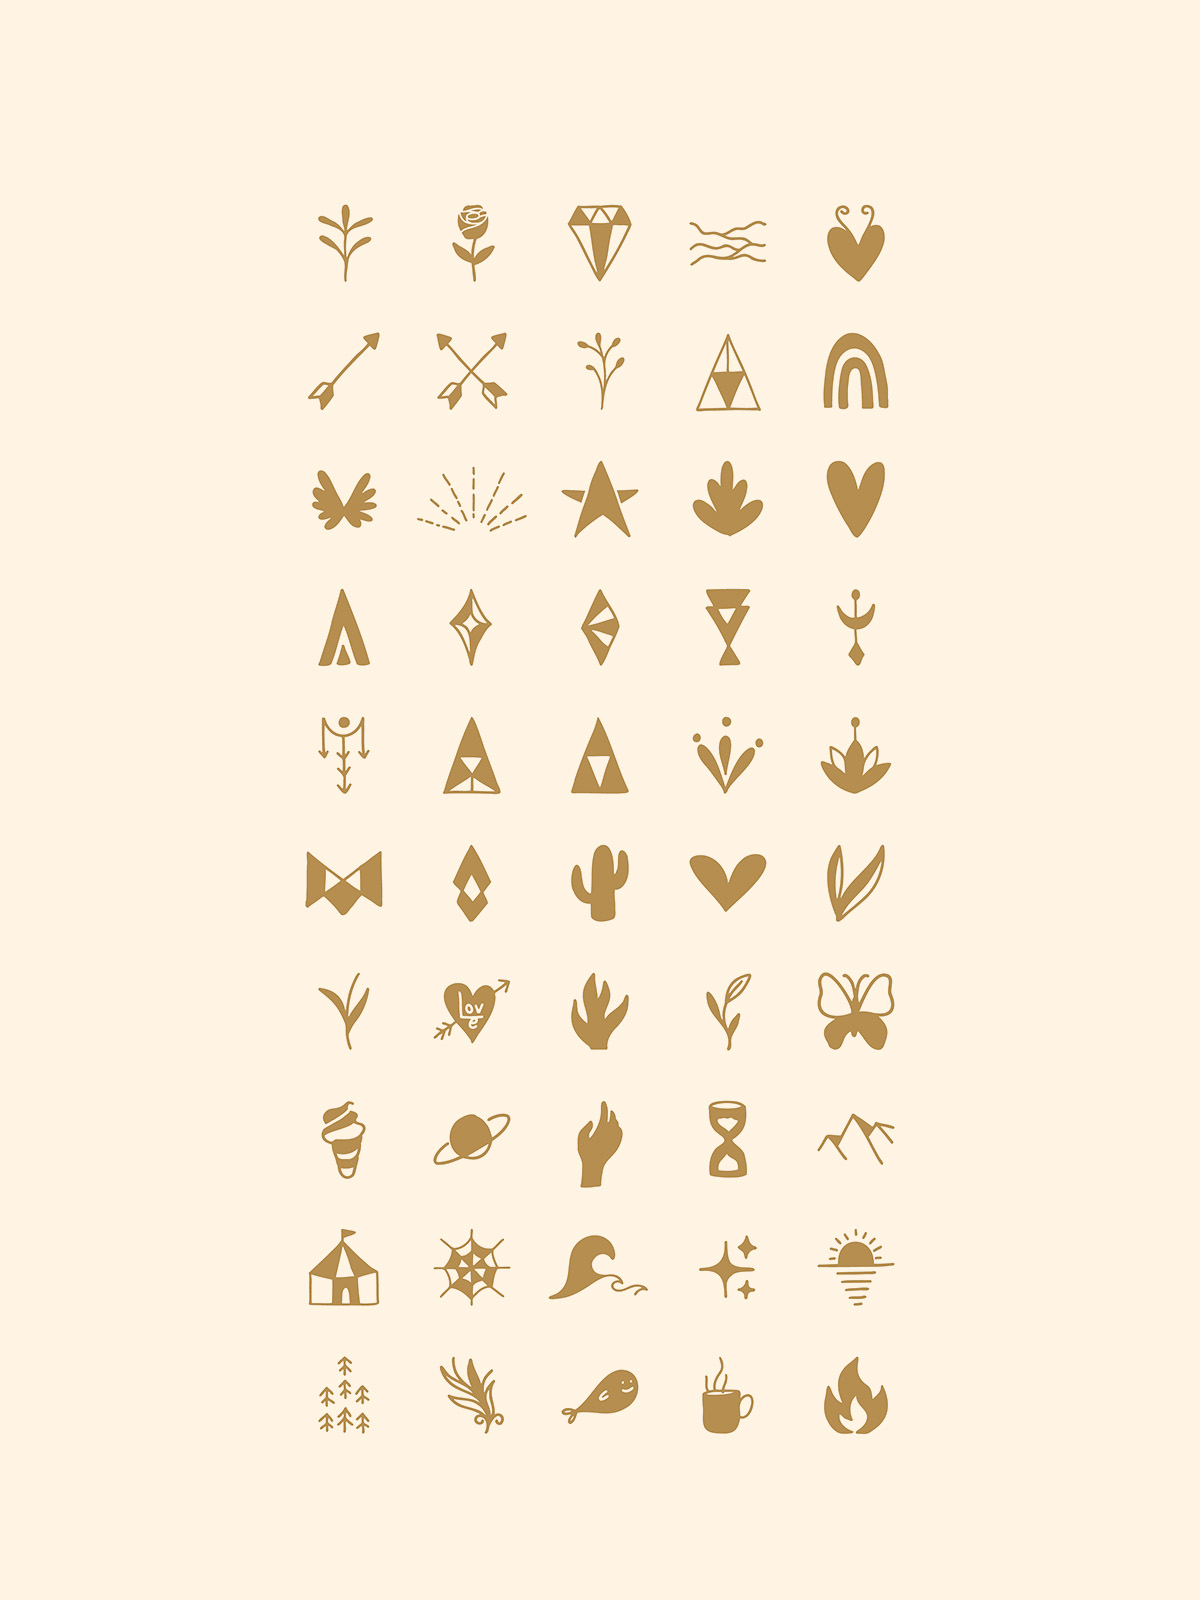 Hand drawn vector symbols and icons